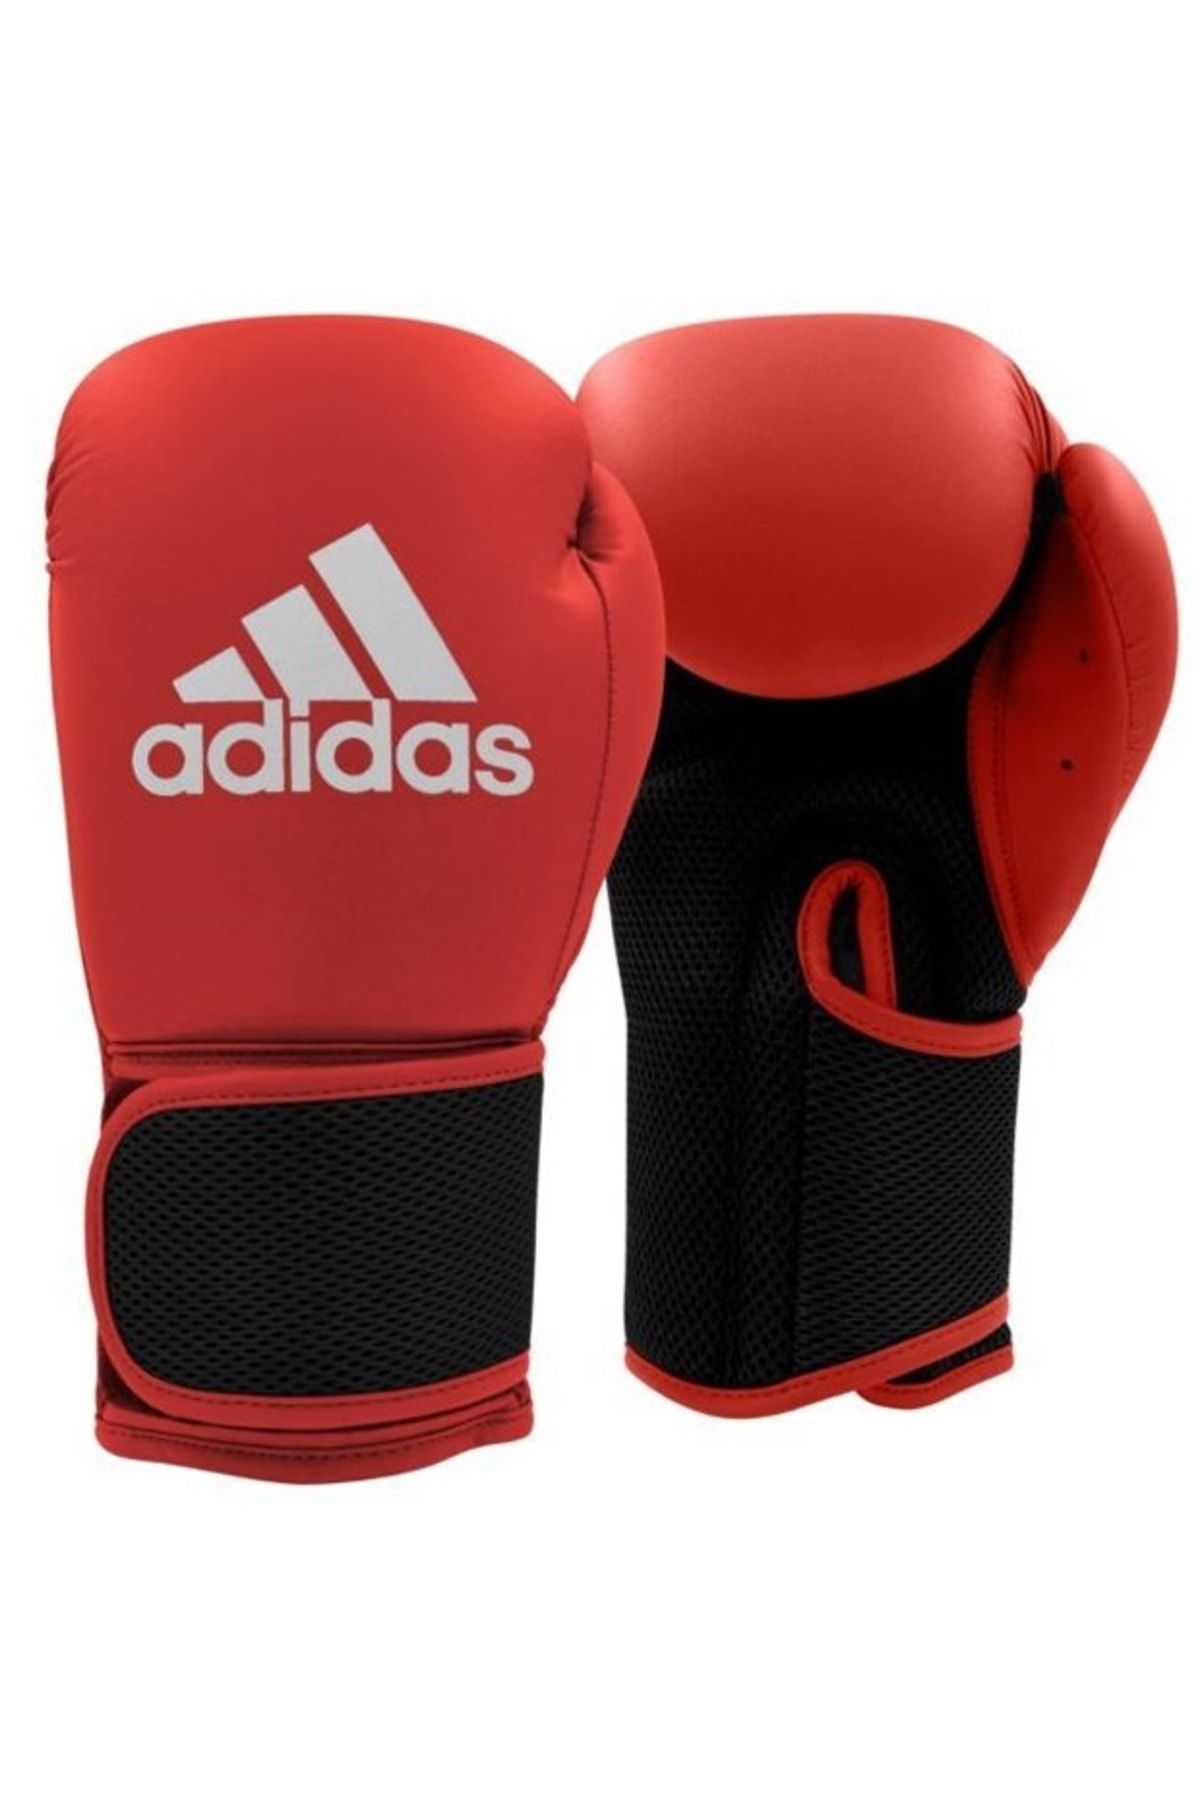 adidas Adıh25 Hybrid 25 Boks Eldiveni Muay Thai Boxing Gloves